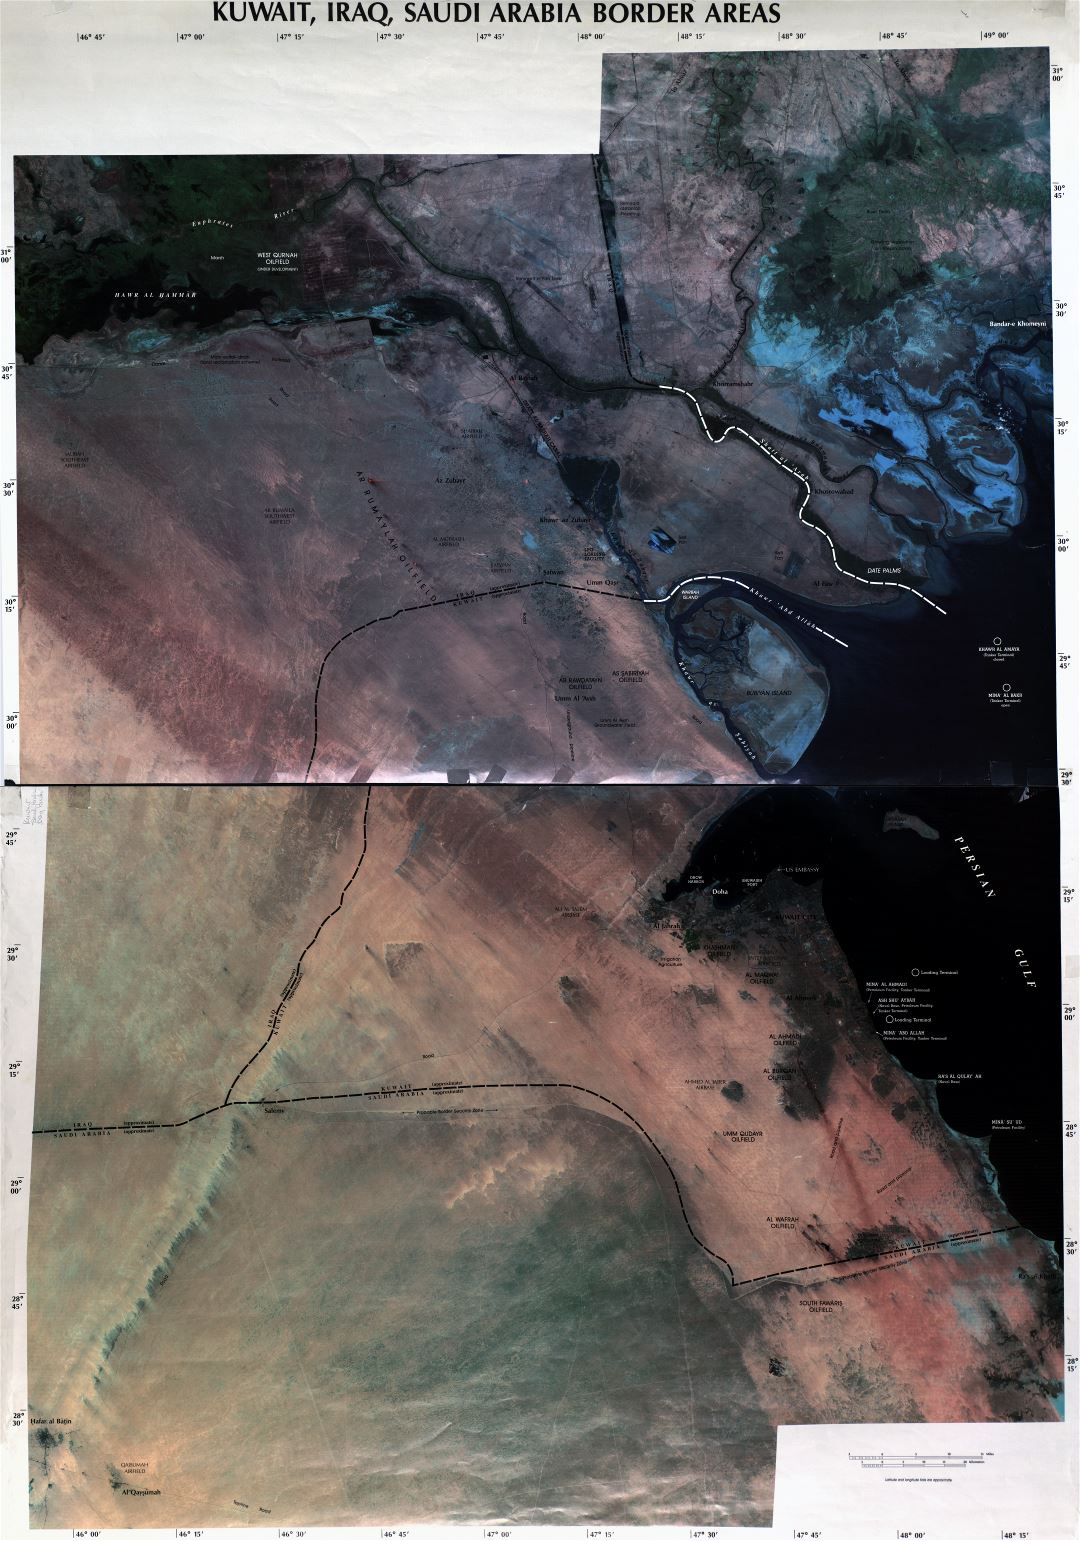 Large scale detailed satellite map of Kuwait, Iraq and Saudi Arabia border areas - 2003